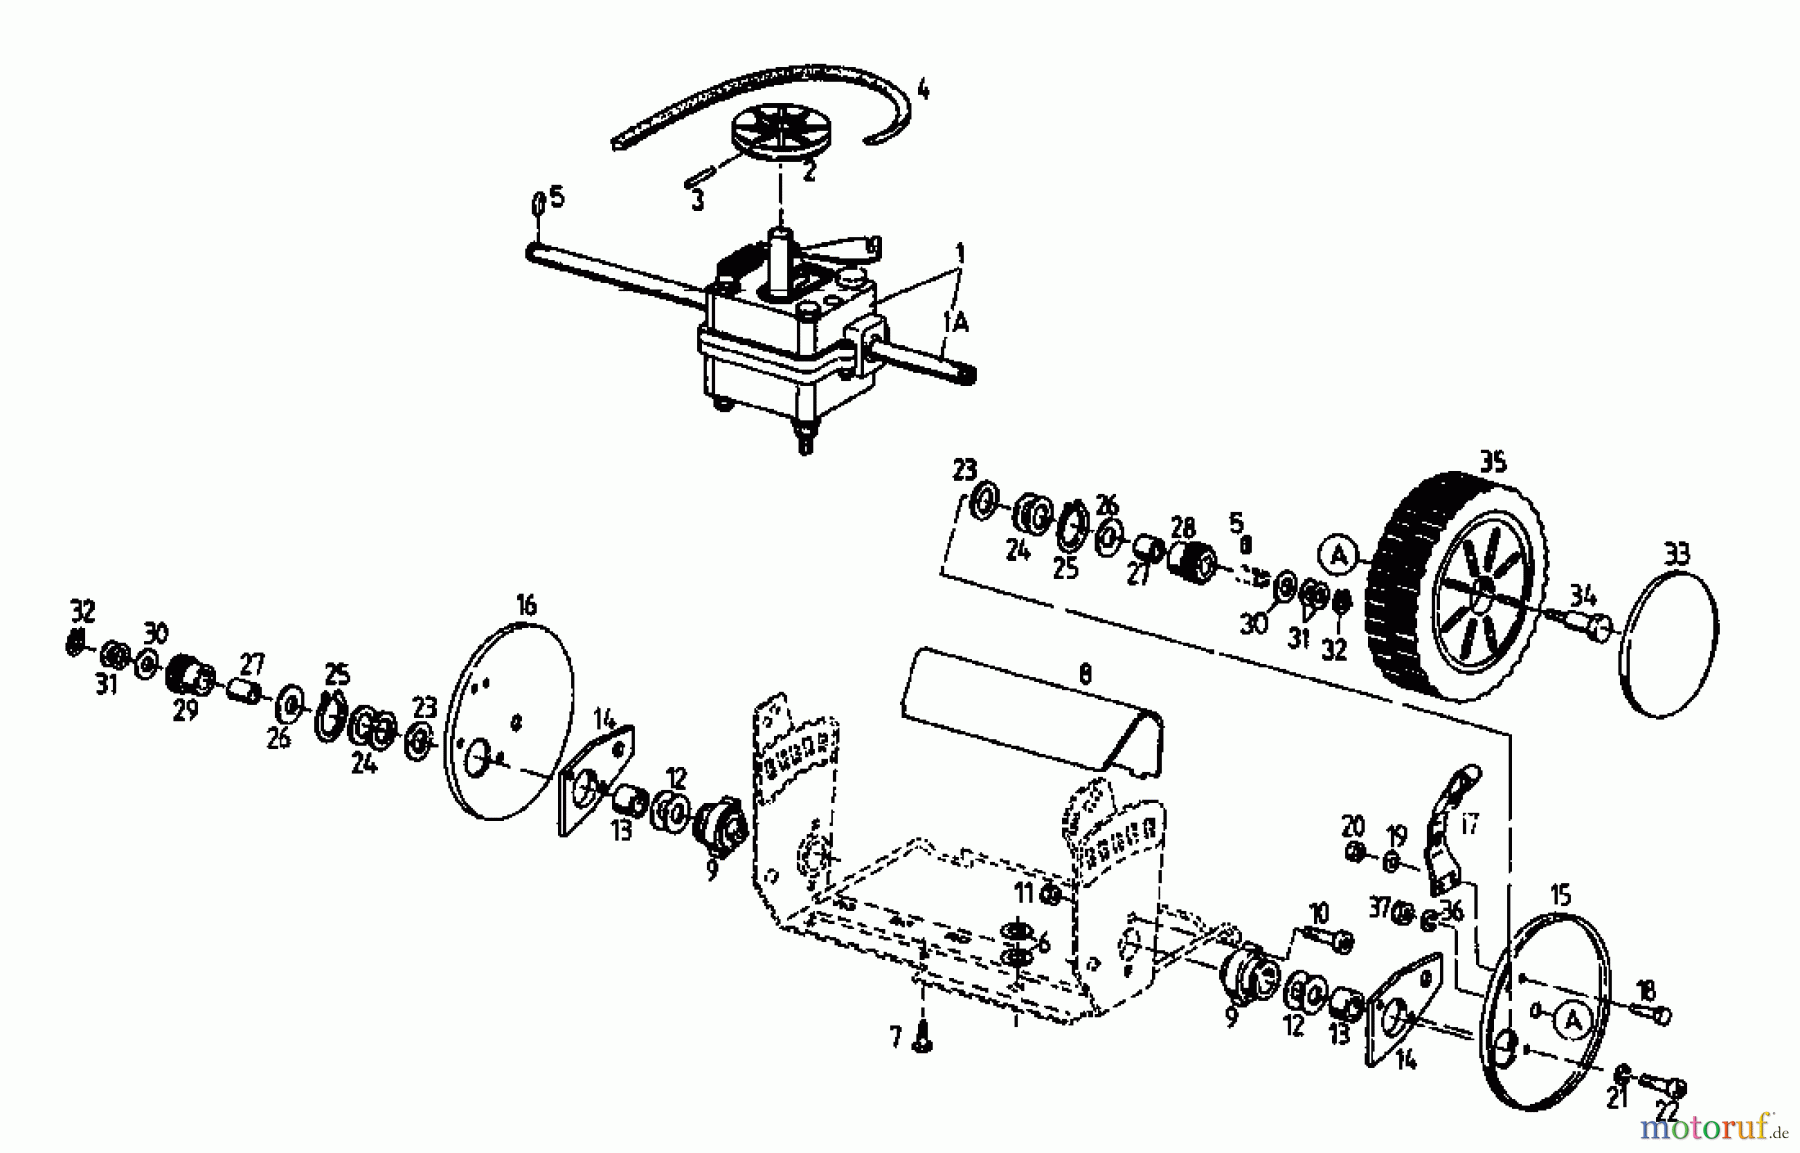  Floraself Petrol mower self propelled 3746 BLR 04033.02  (1996) Gearbox, Wheels, Cutting hight adjustment